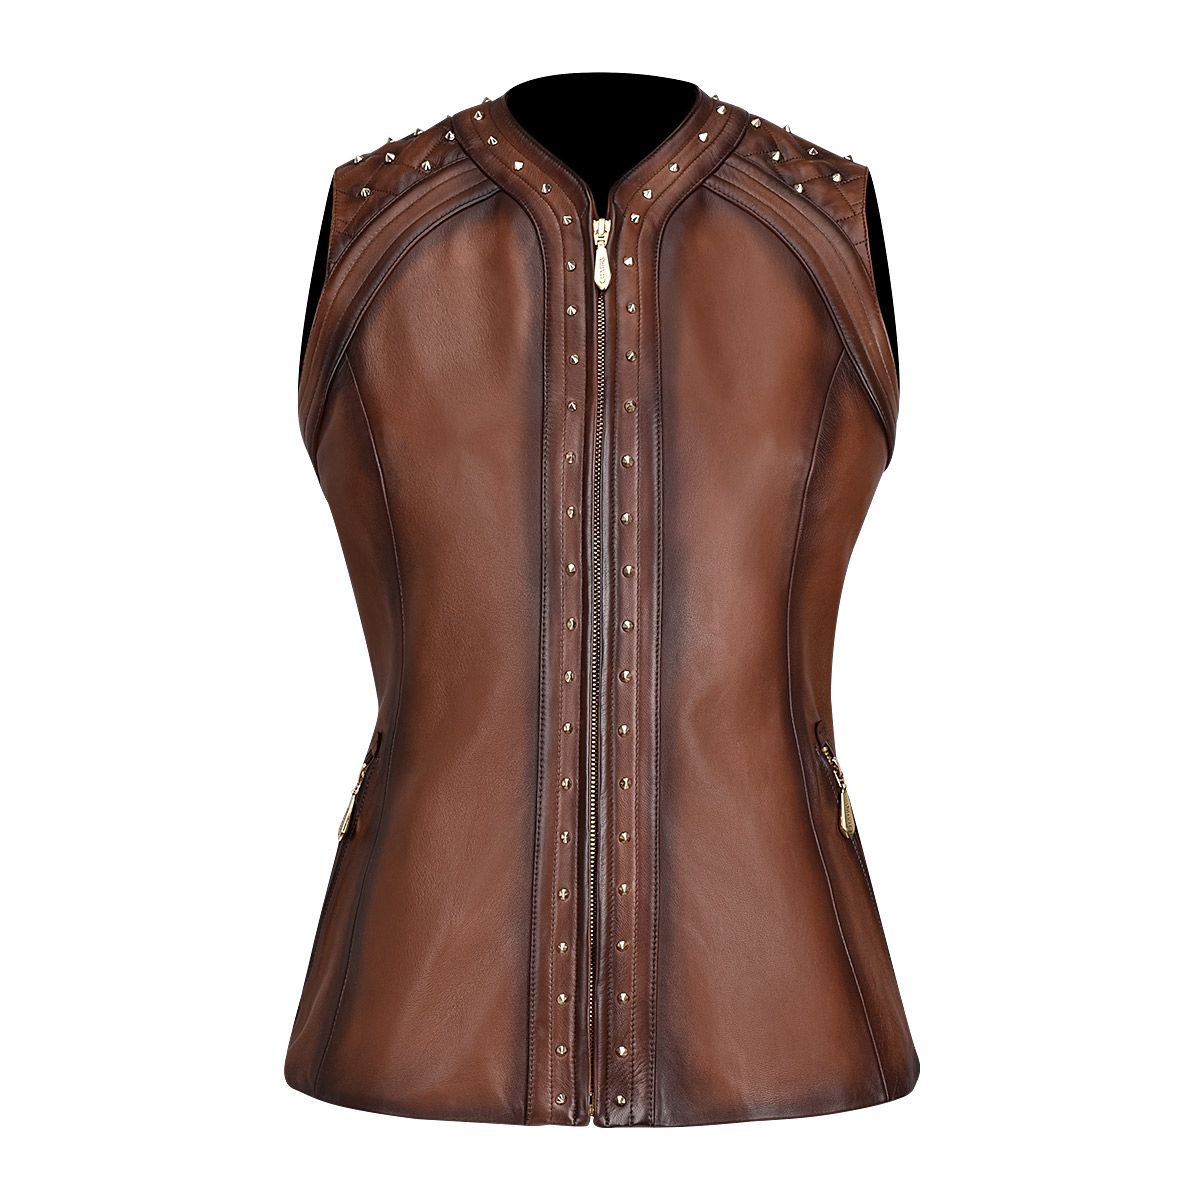 Womens Soulderpads brown leather vest